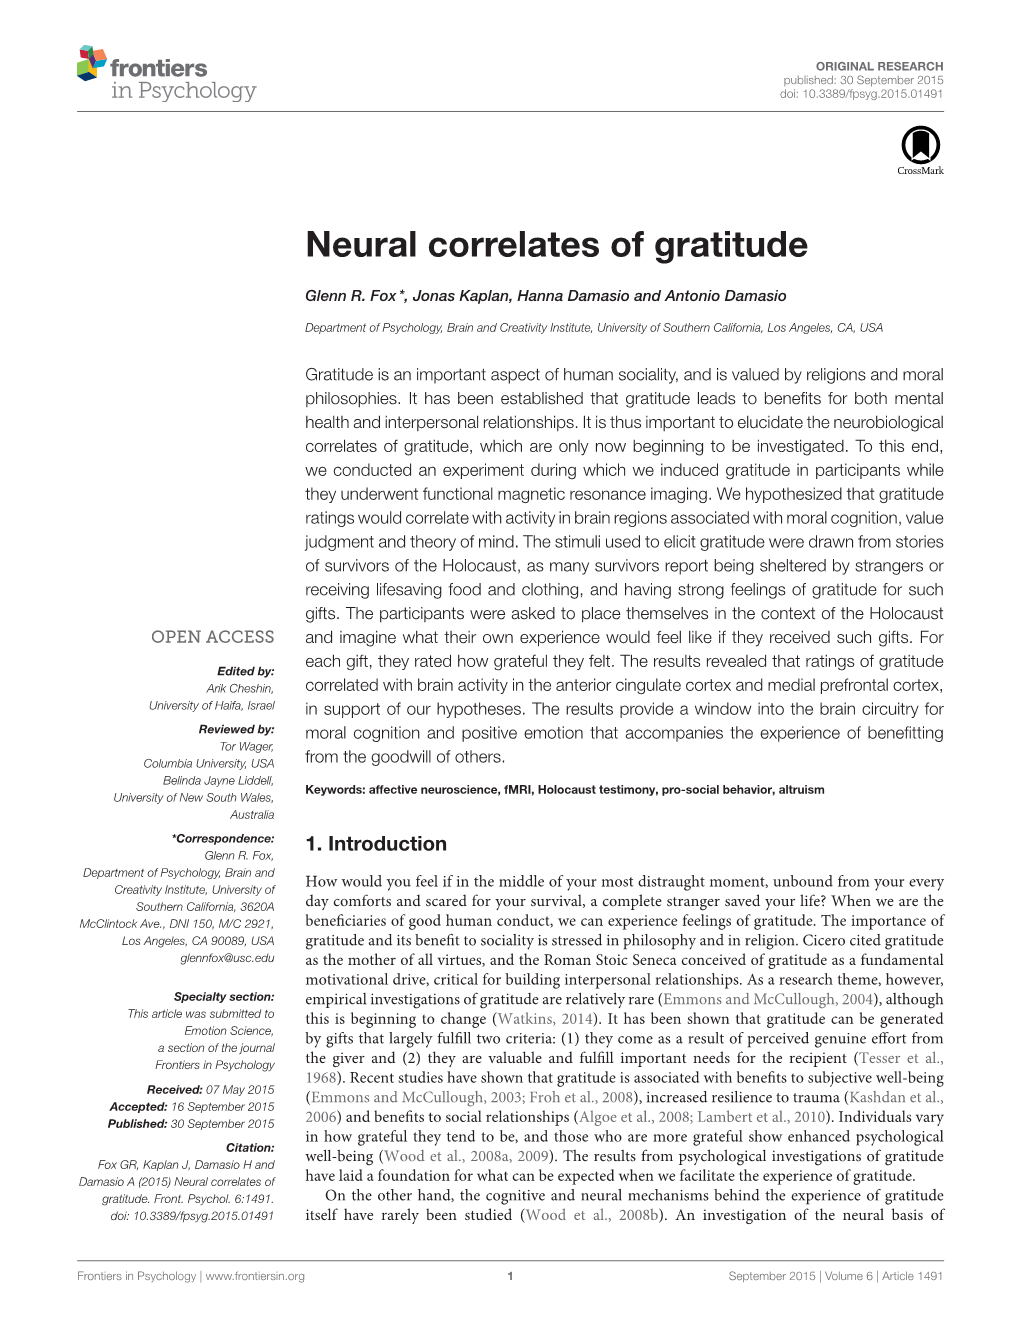 Neural Correlates of Gratitude